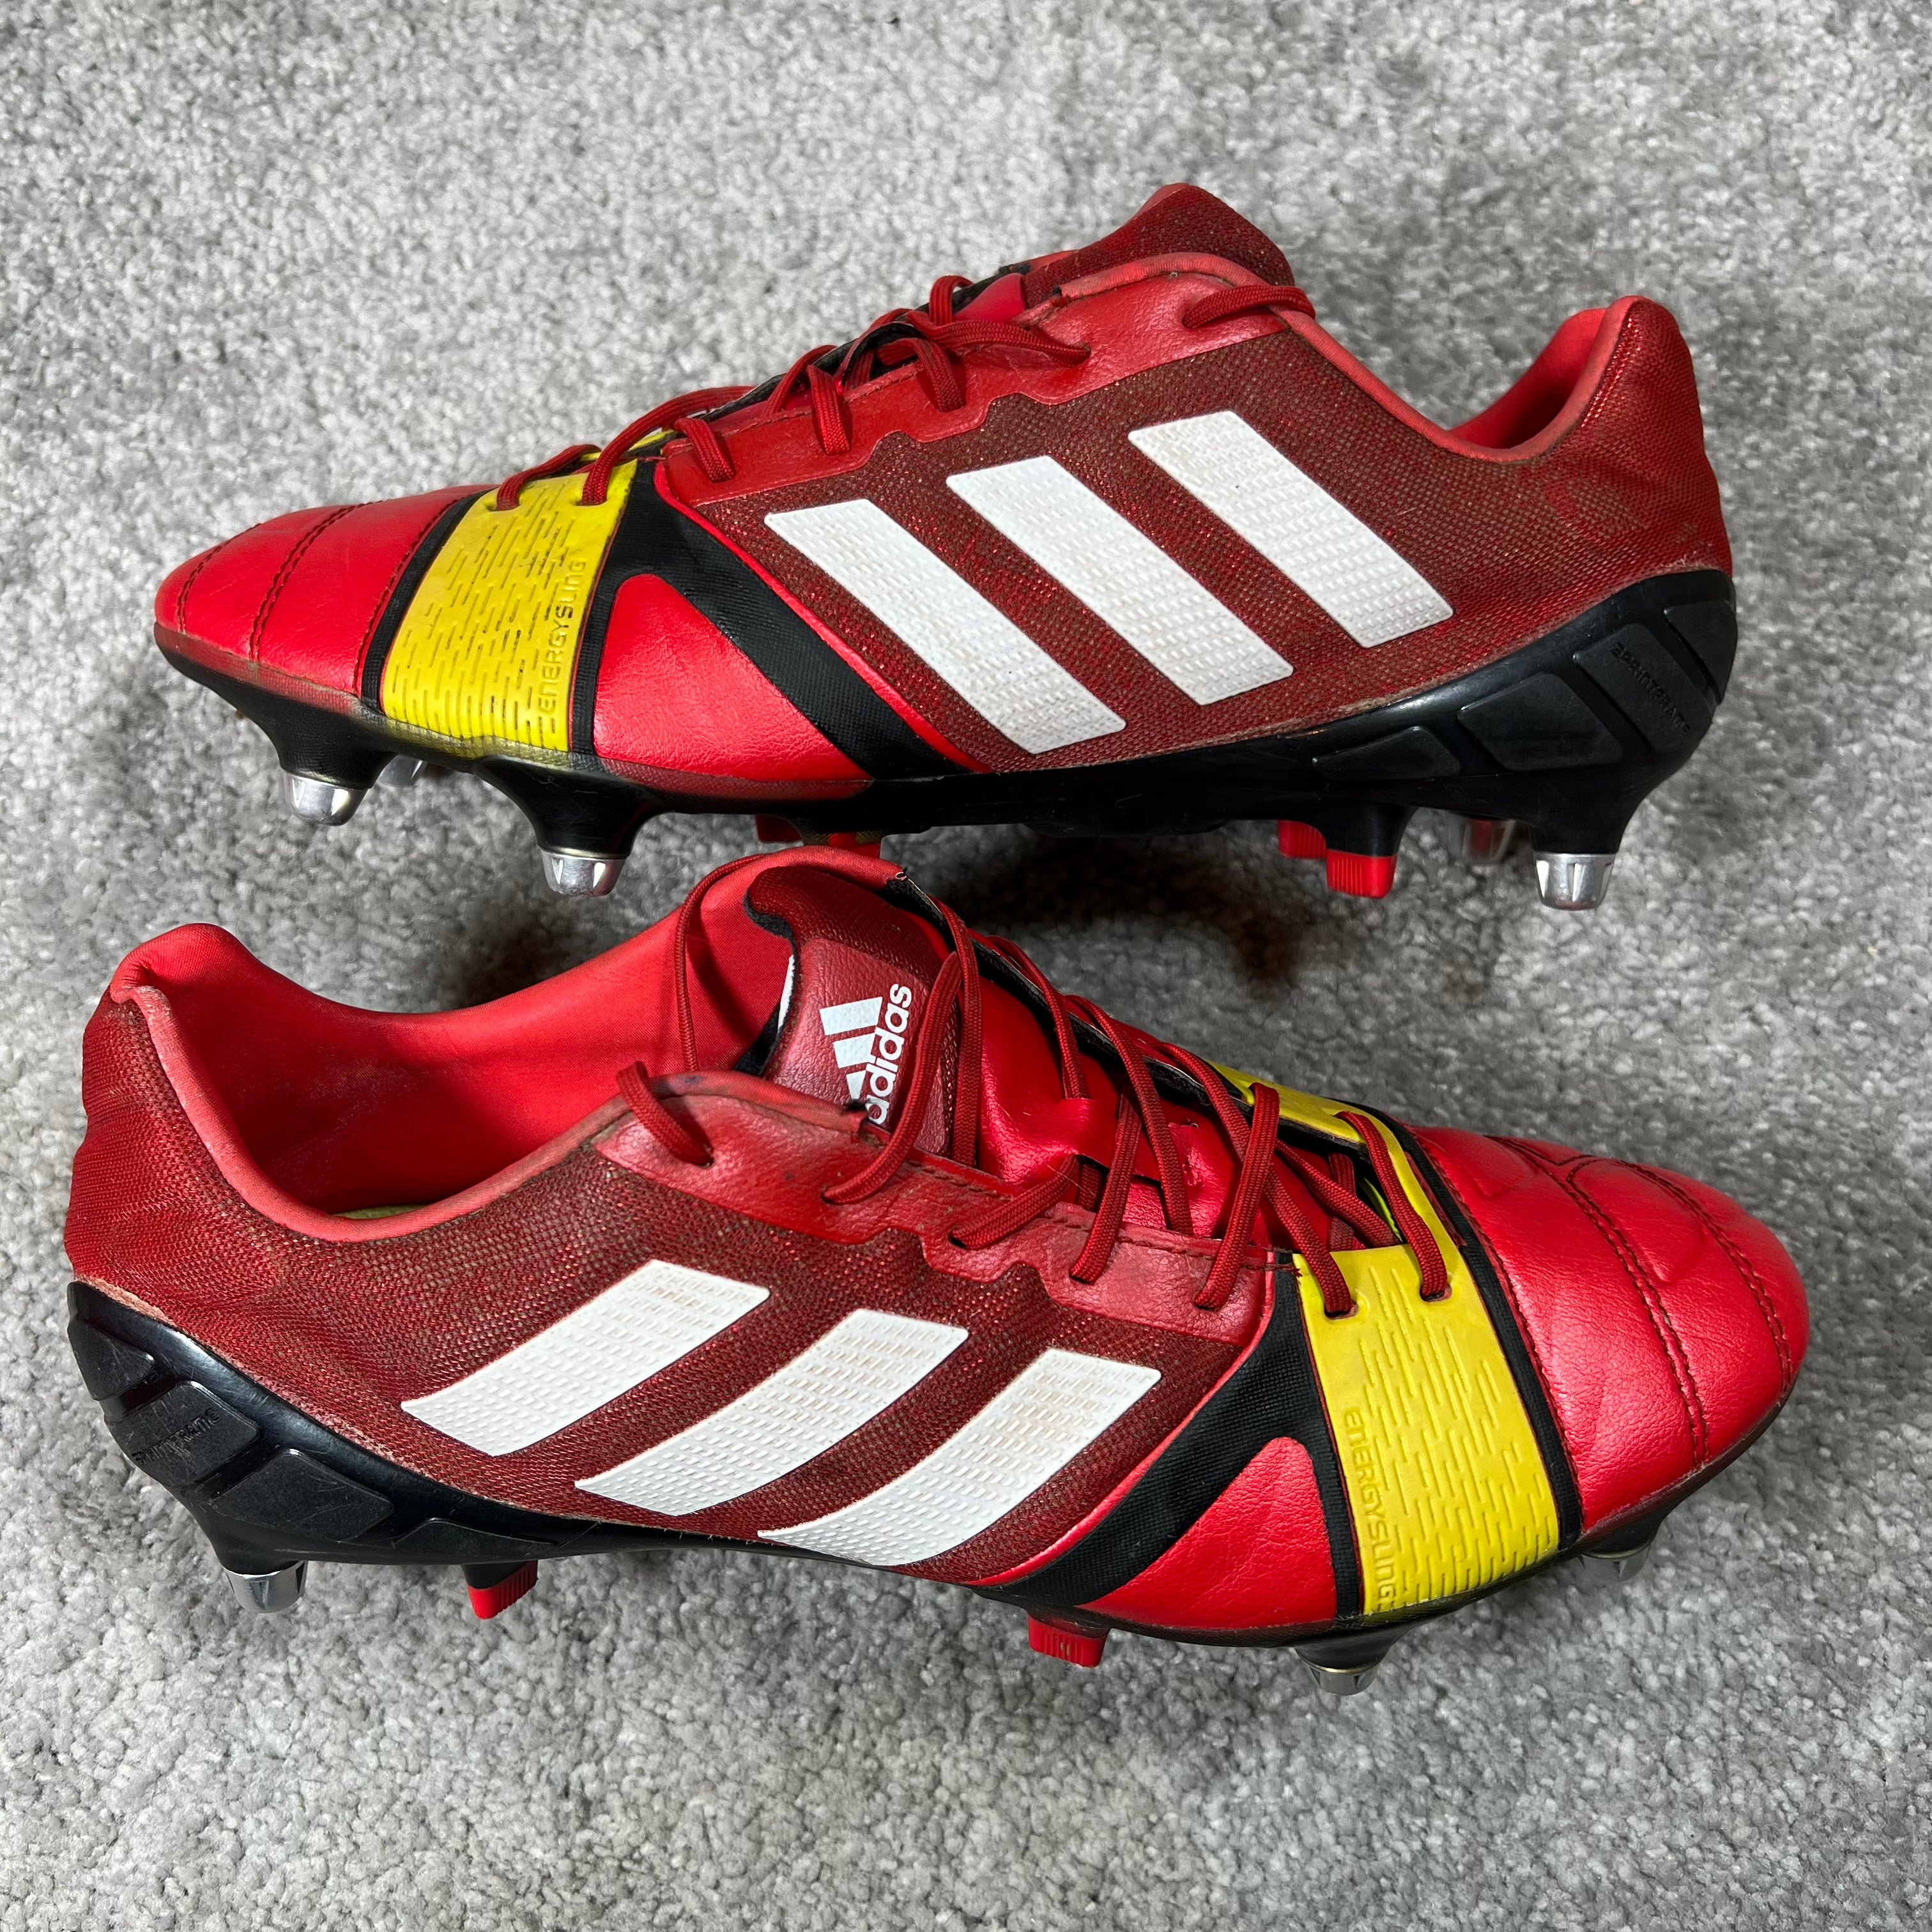 Adidas Nitrocharge 1.0 SG – The Football Capsule